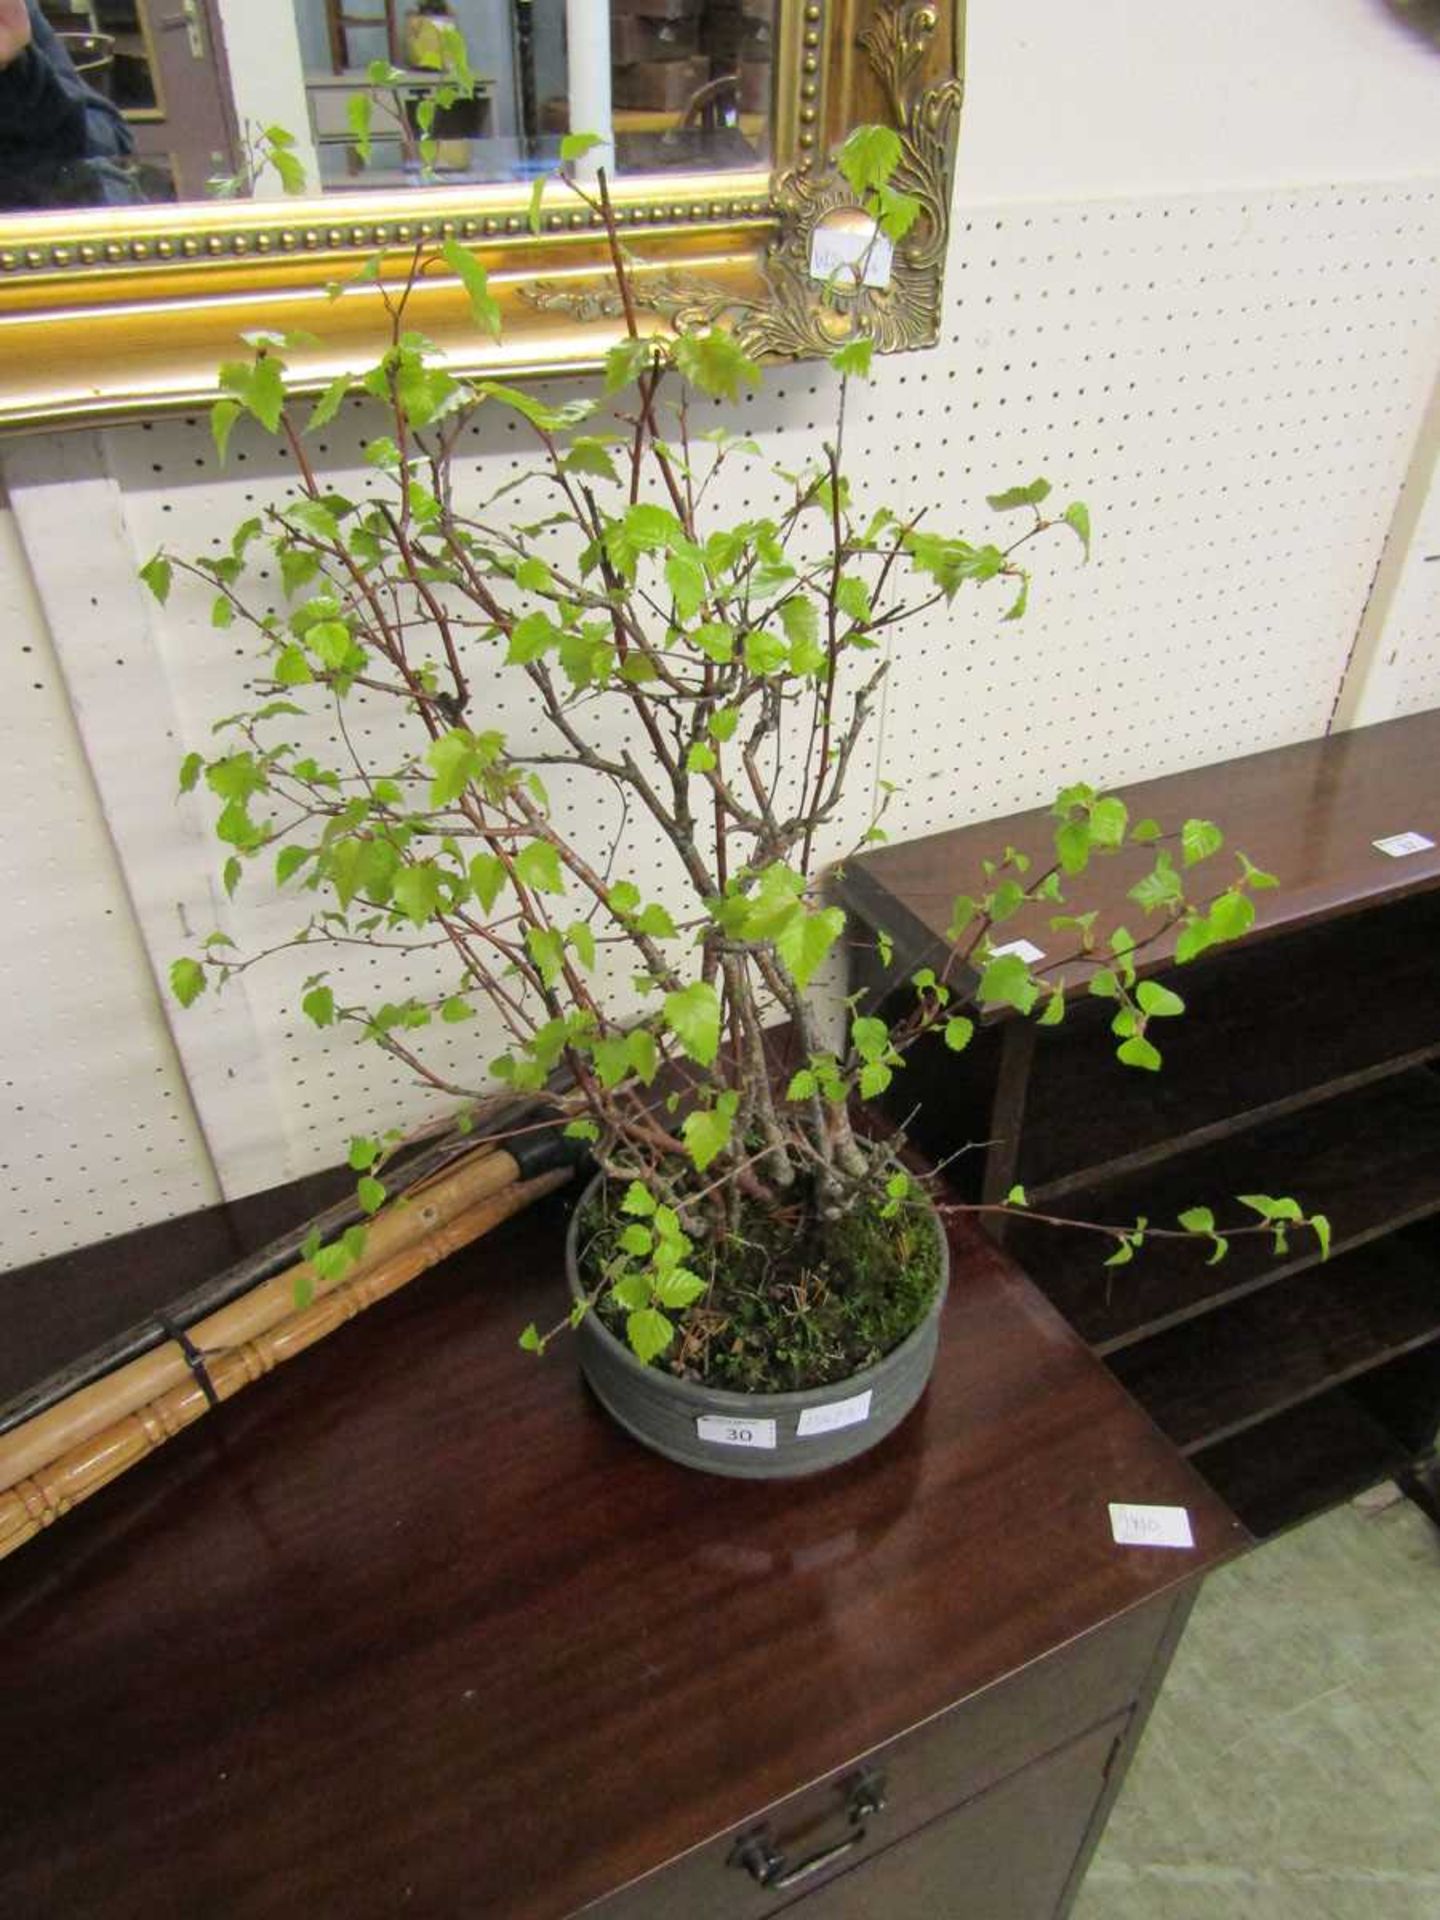 A Bonsai plant in circular pot